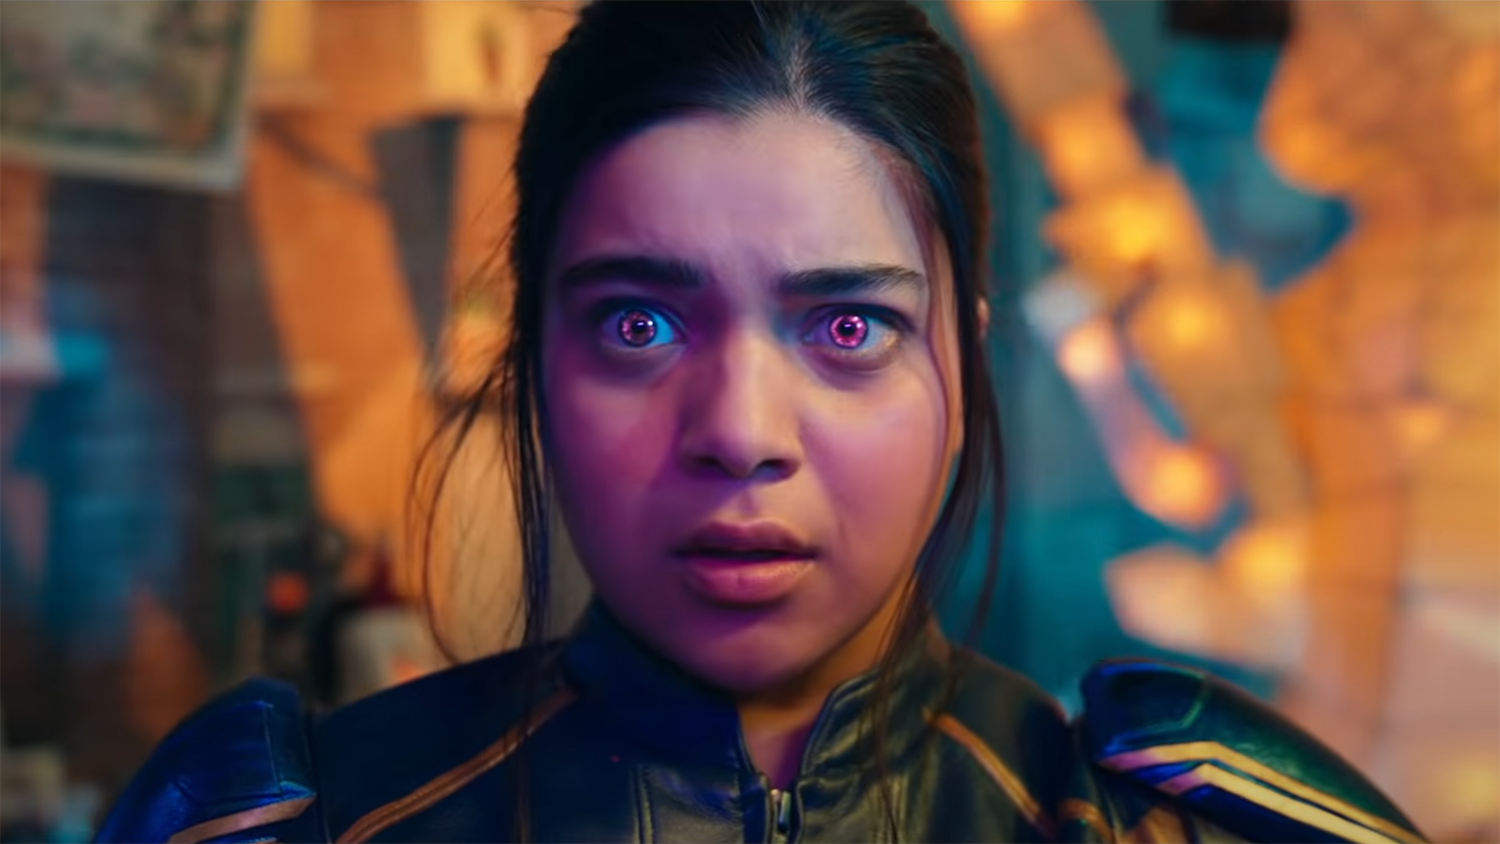 New Disney Plus TV show looks like 2022's mustwatch Marvel superhero